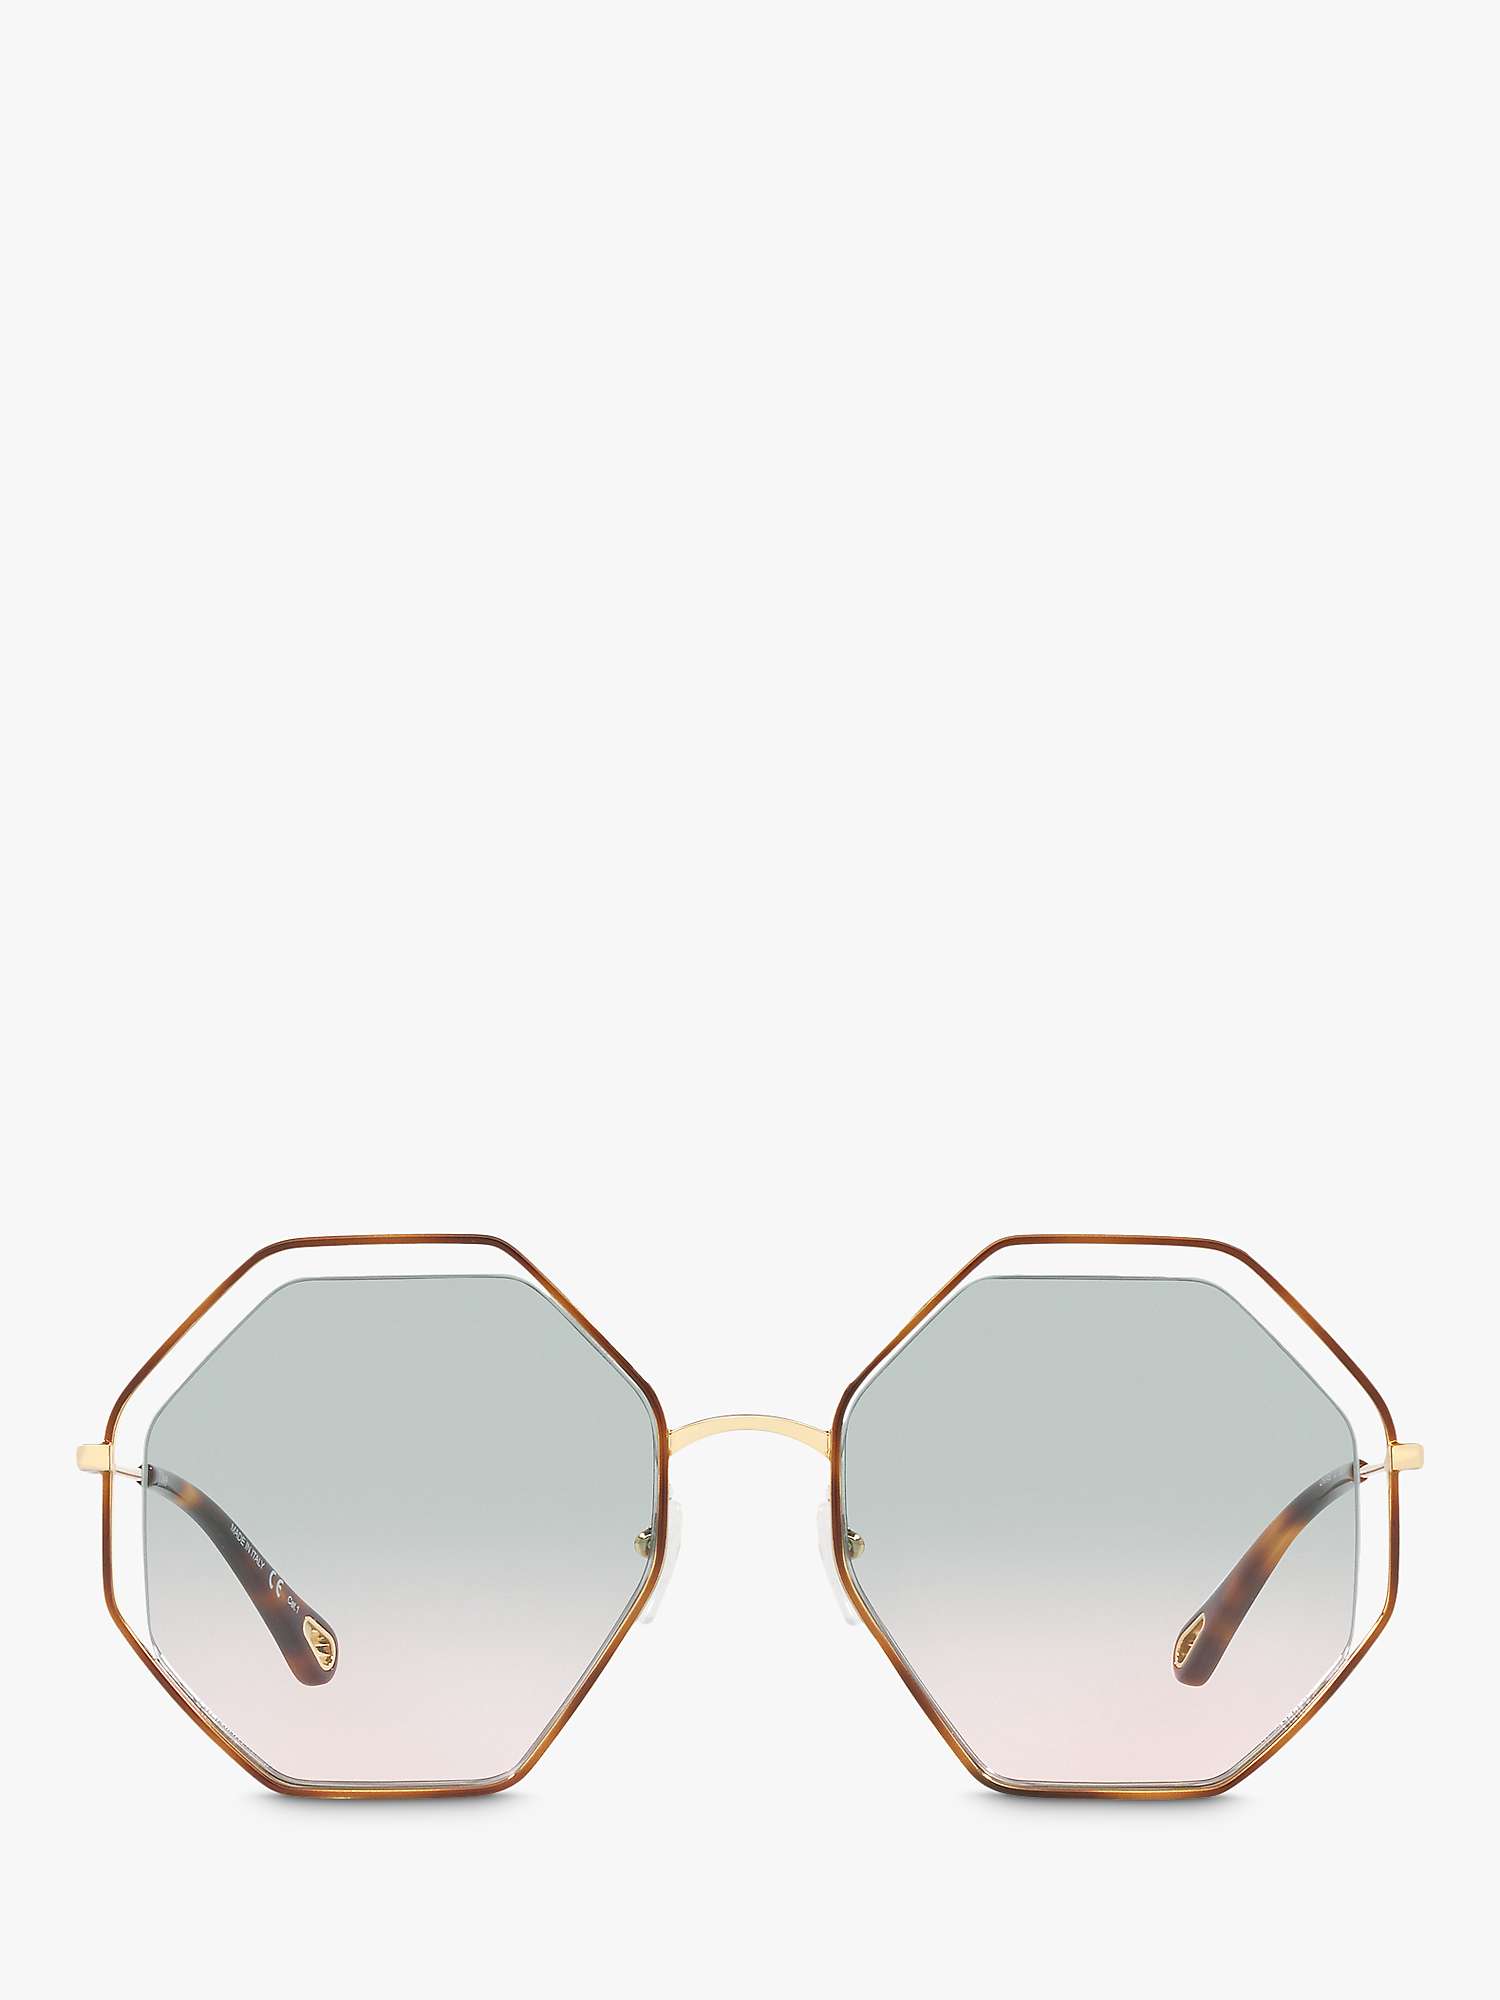 Buy Chloé CH0046S Women's Octagonal Sunglasses Online at johnlewis.com